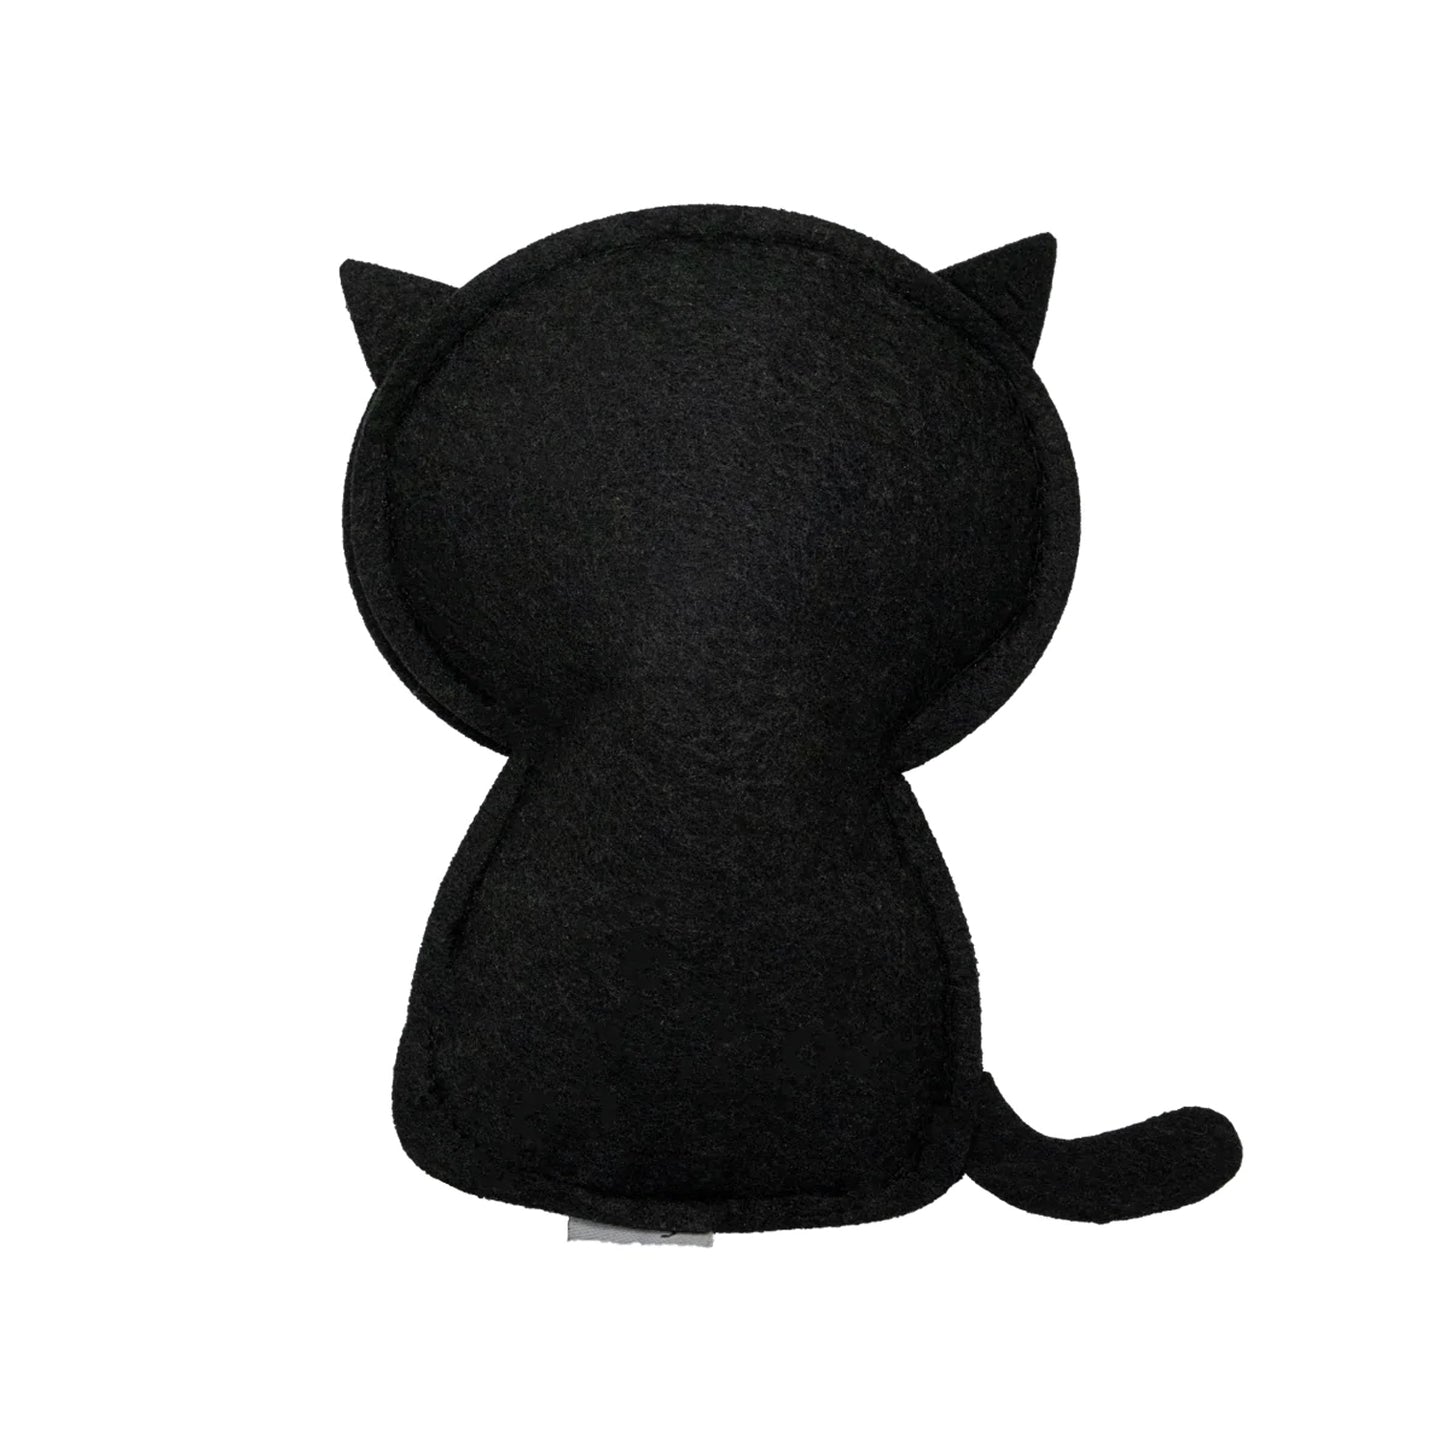 Hriku - Marjari (Cat) Catnip Toy For Cats